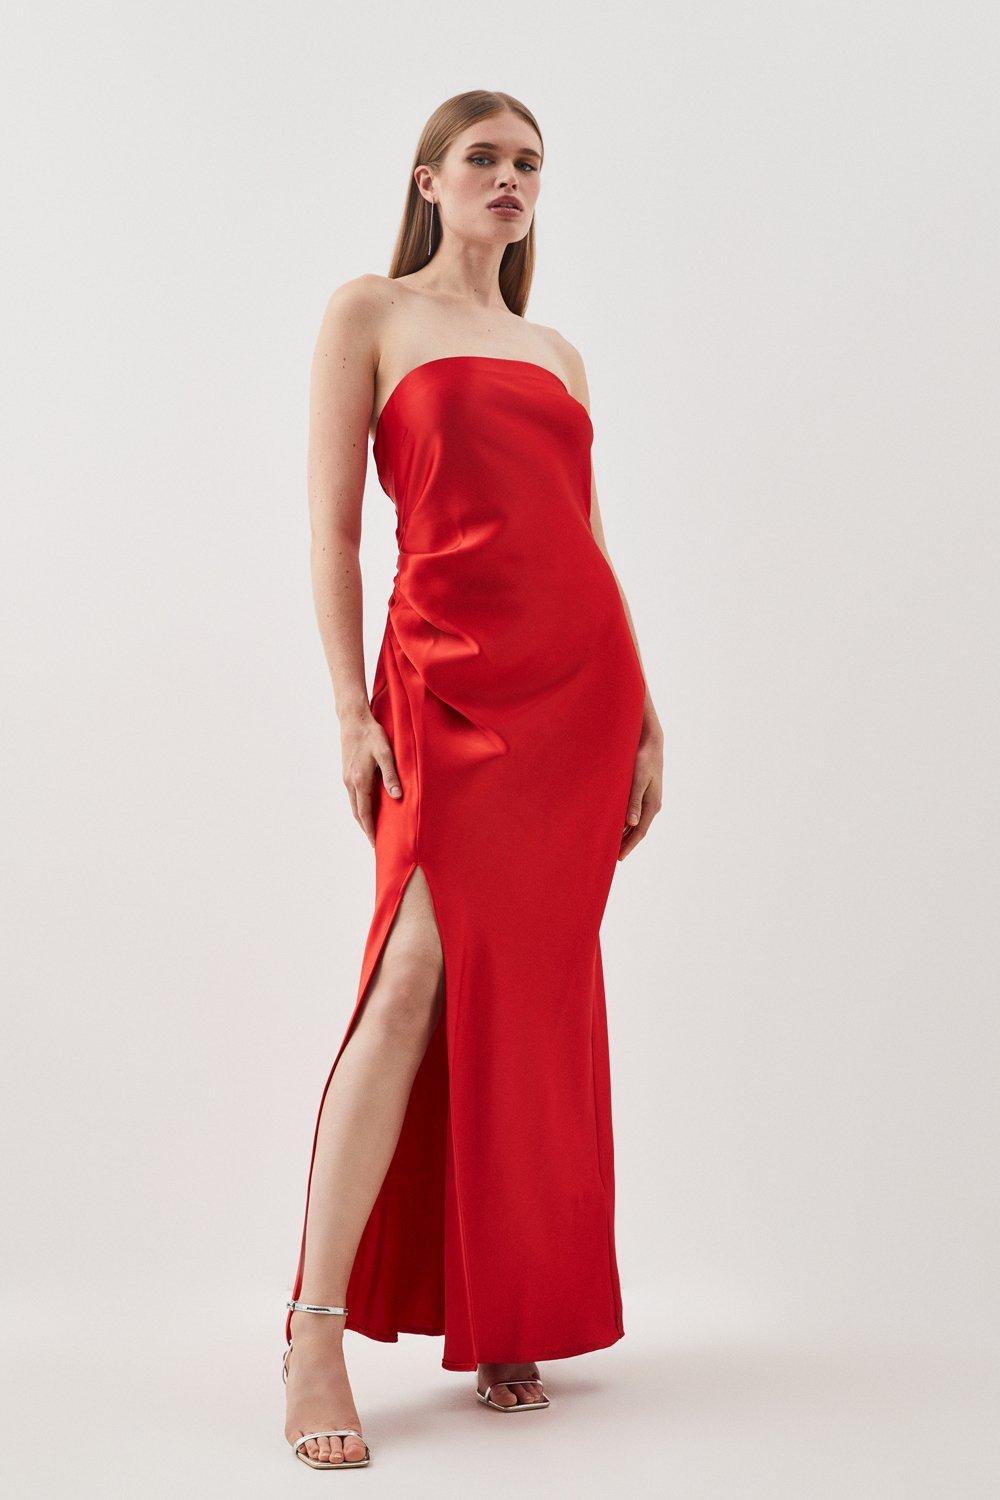 HNXMJ Vintage Red Evening Dress Party V-neck Zipper Black Horn Evening Dress  (Color : 6.5 UK, US Size : 5.5 UK) : Amazon.co.uk: Fashion